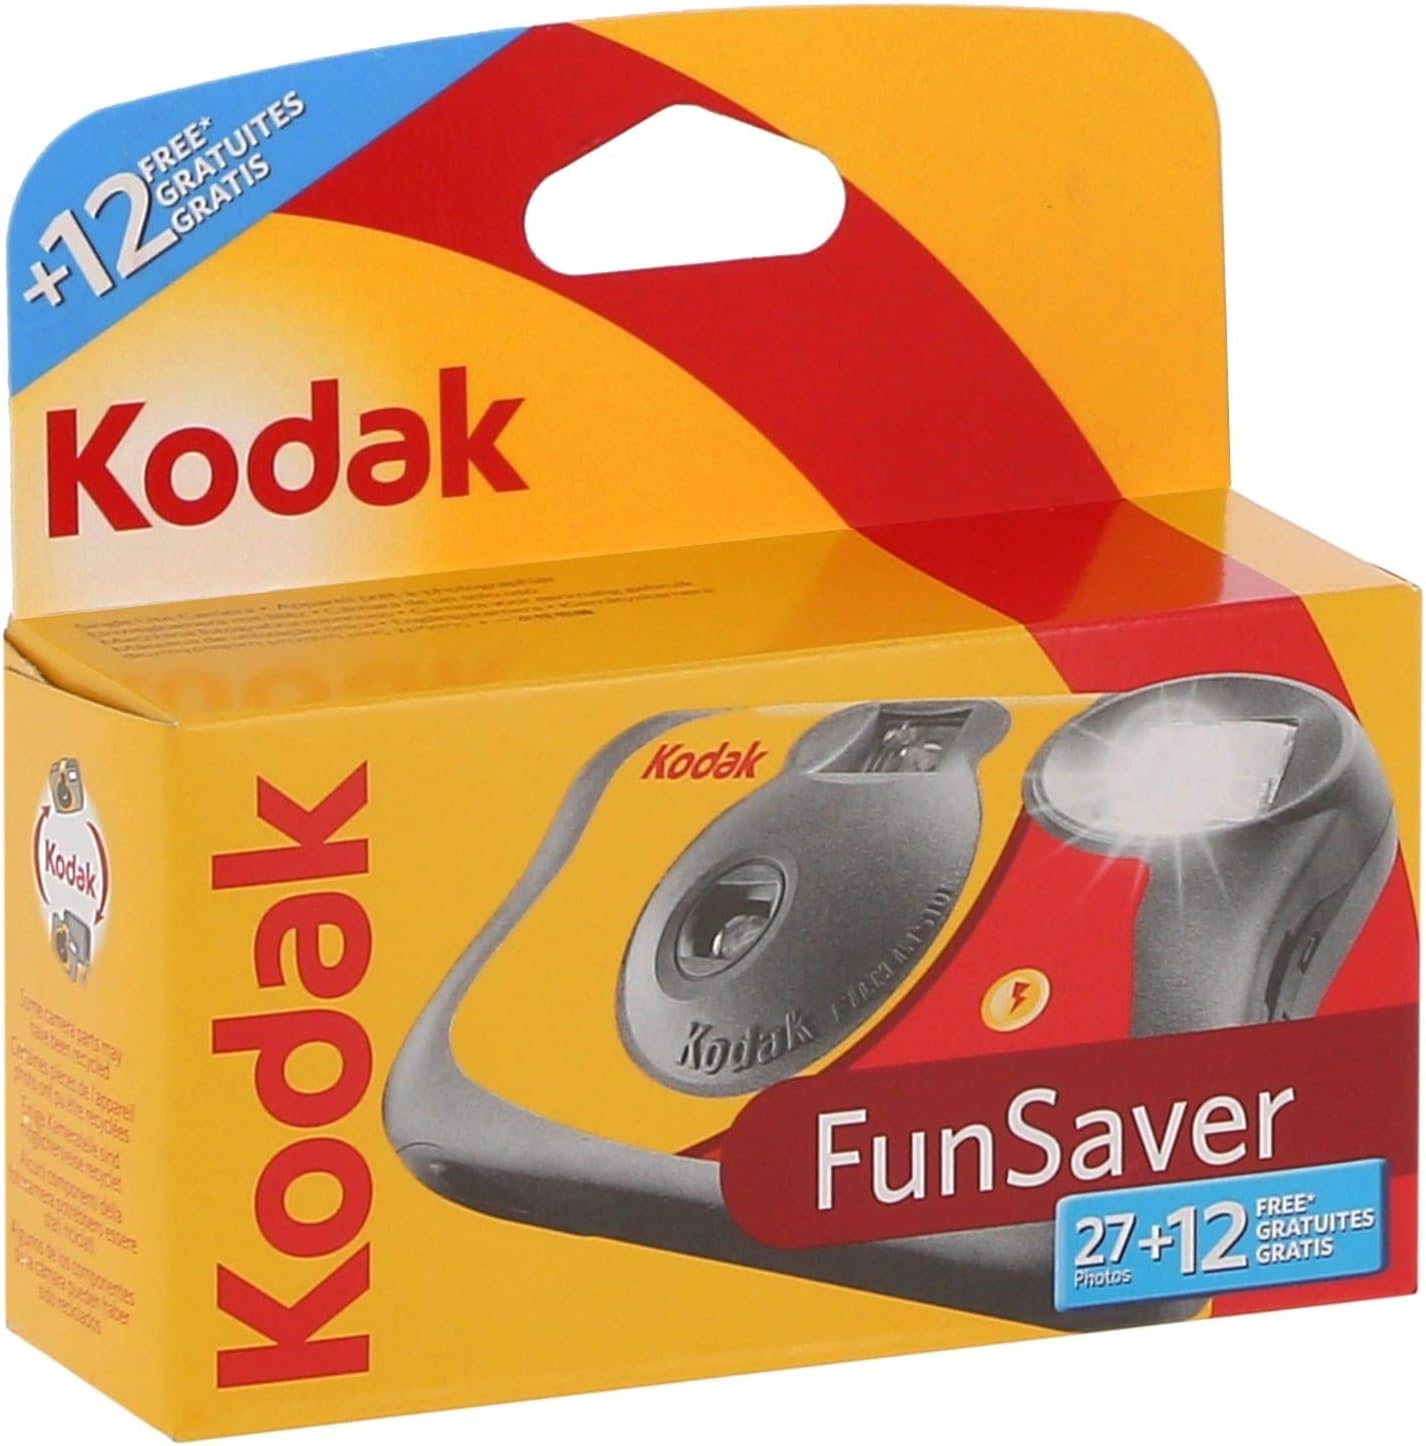 Kodak Fun Saver 27+12 - Cuarto Color Lab - Tienda y Lab Revelado Analogico